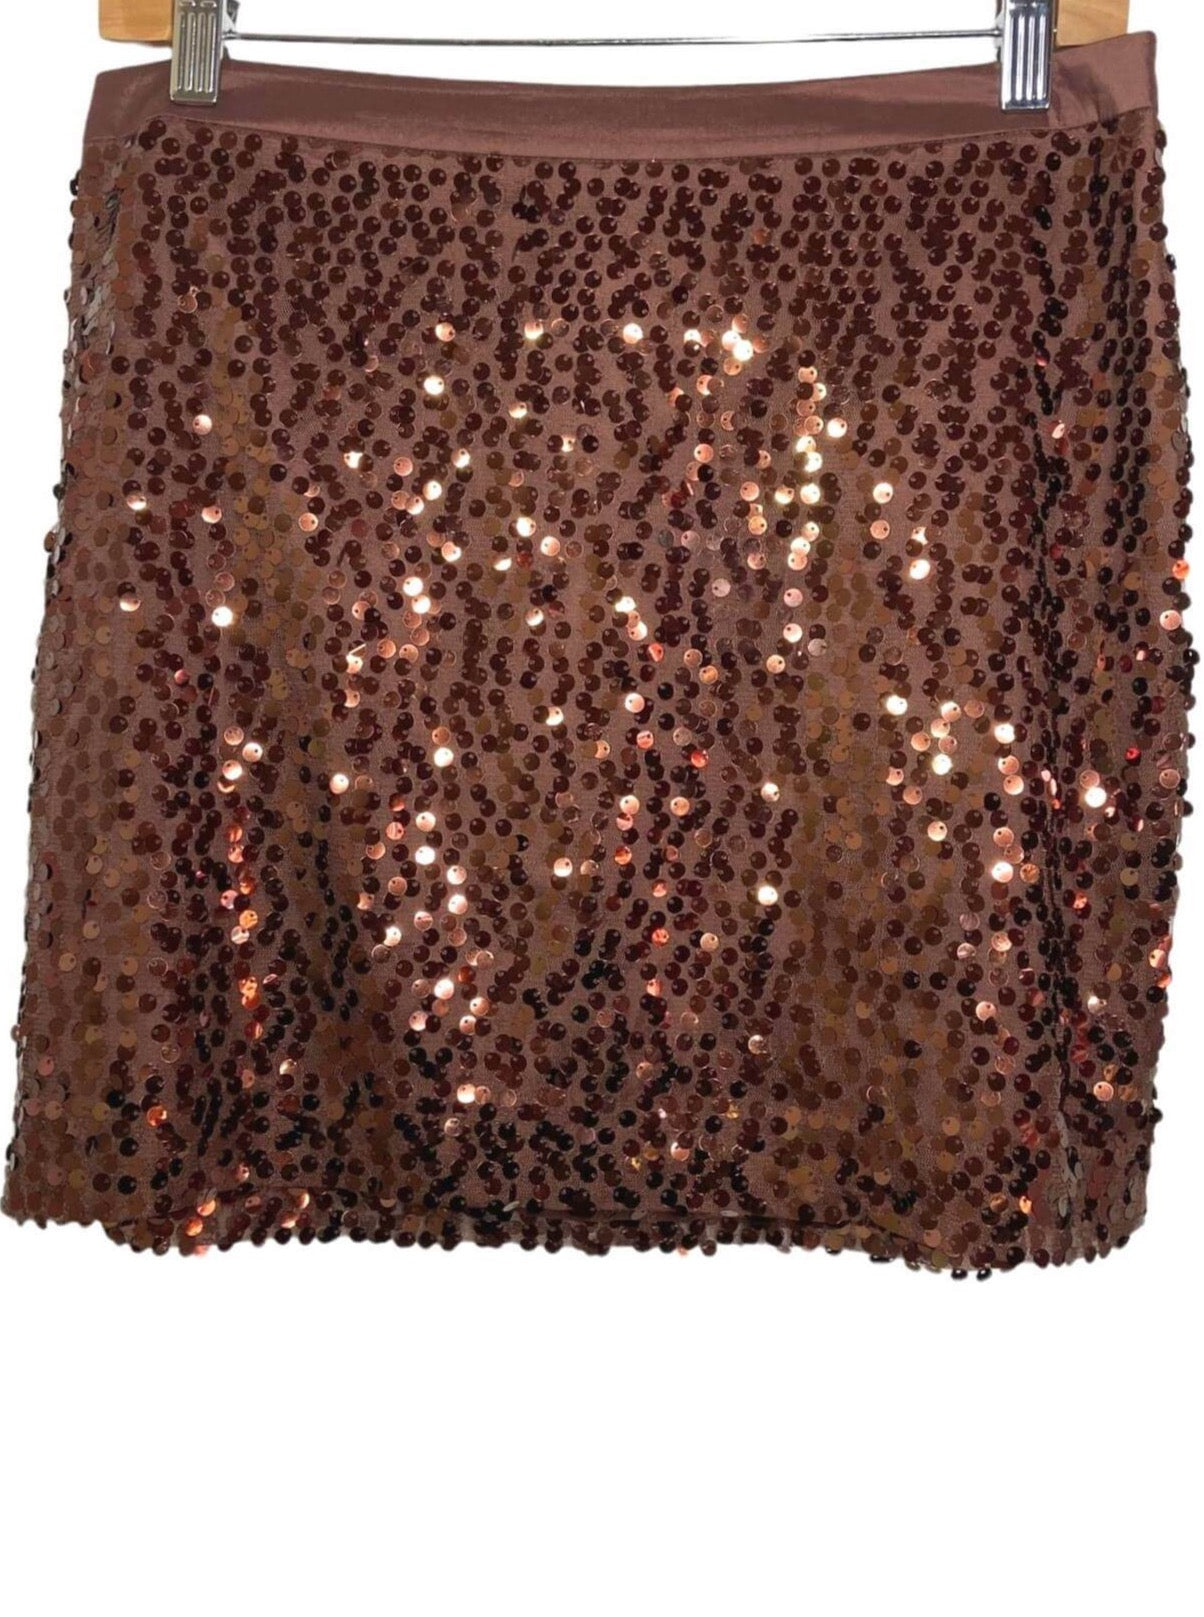 Warm Autumn BANANA REPUBLIC brown sequin mini pencil skirt